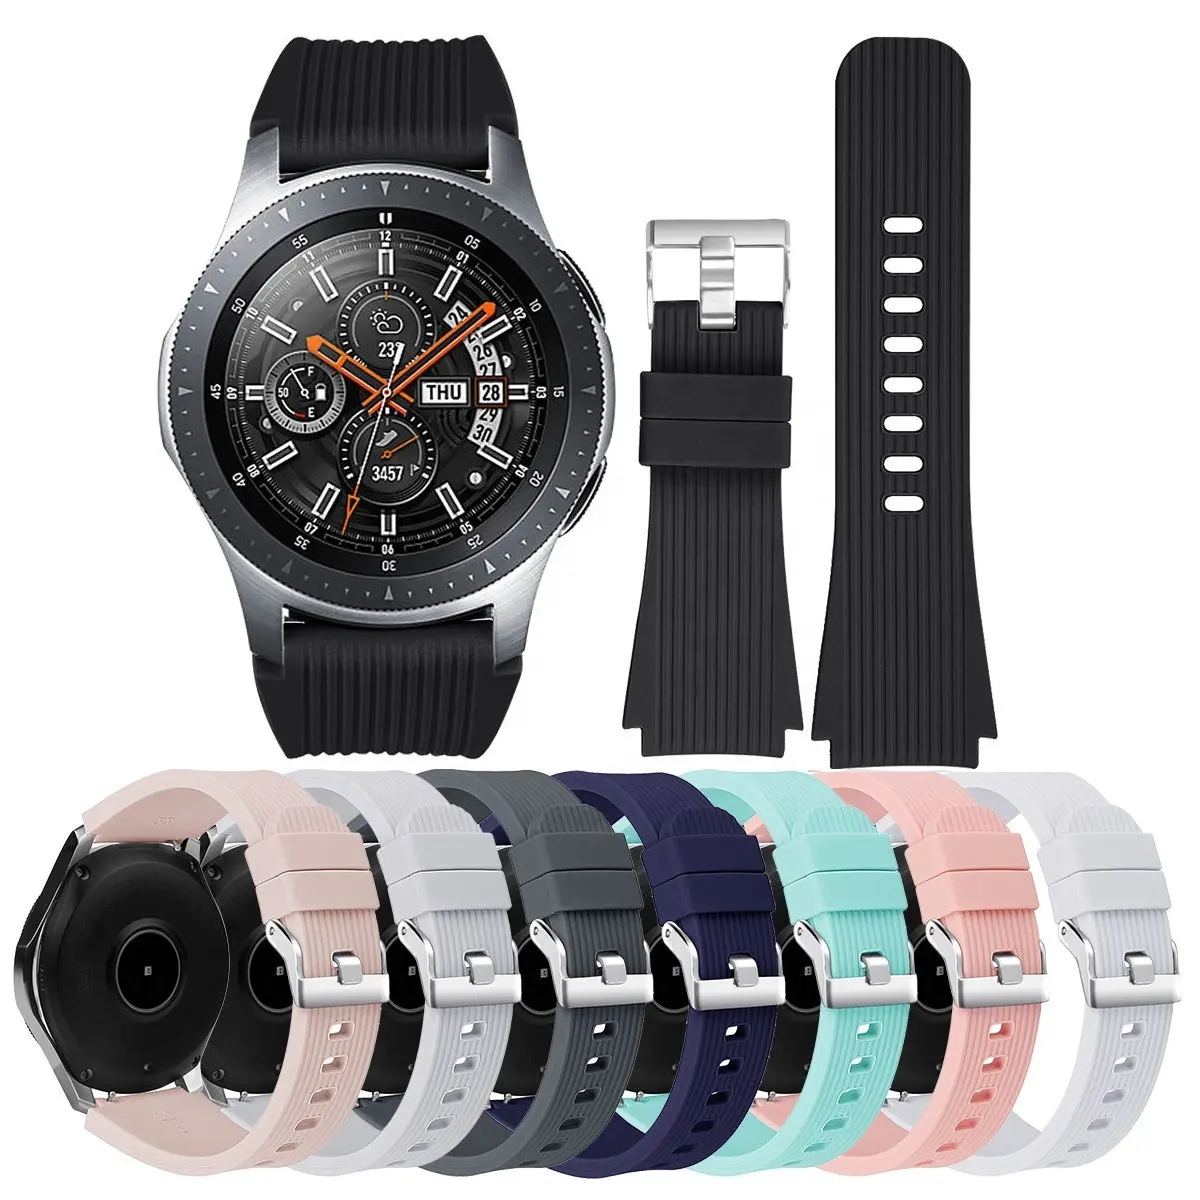 Tali Karet Bergaris Warna Polos Asli 20Mm 22Mm Sport untuk Samsung Galaxy Watch Tali Silikon Gesper Pengganti Aktif